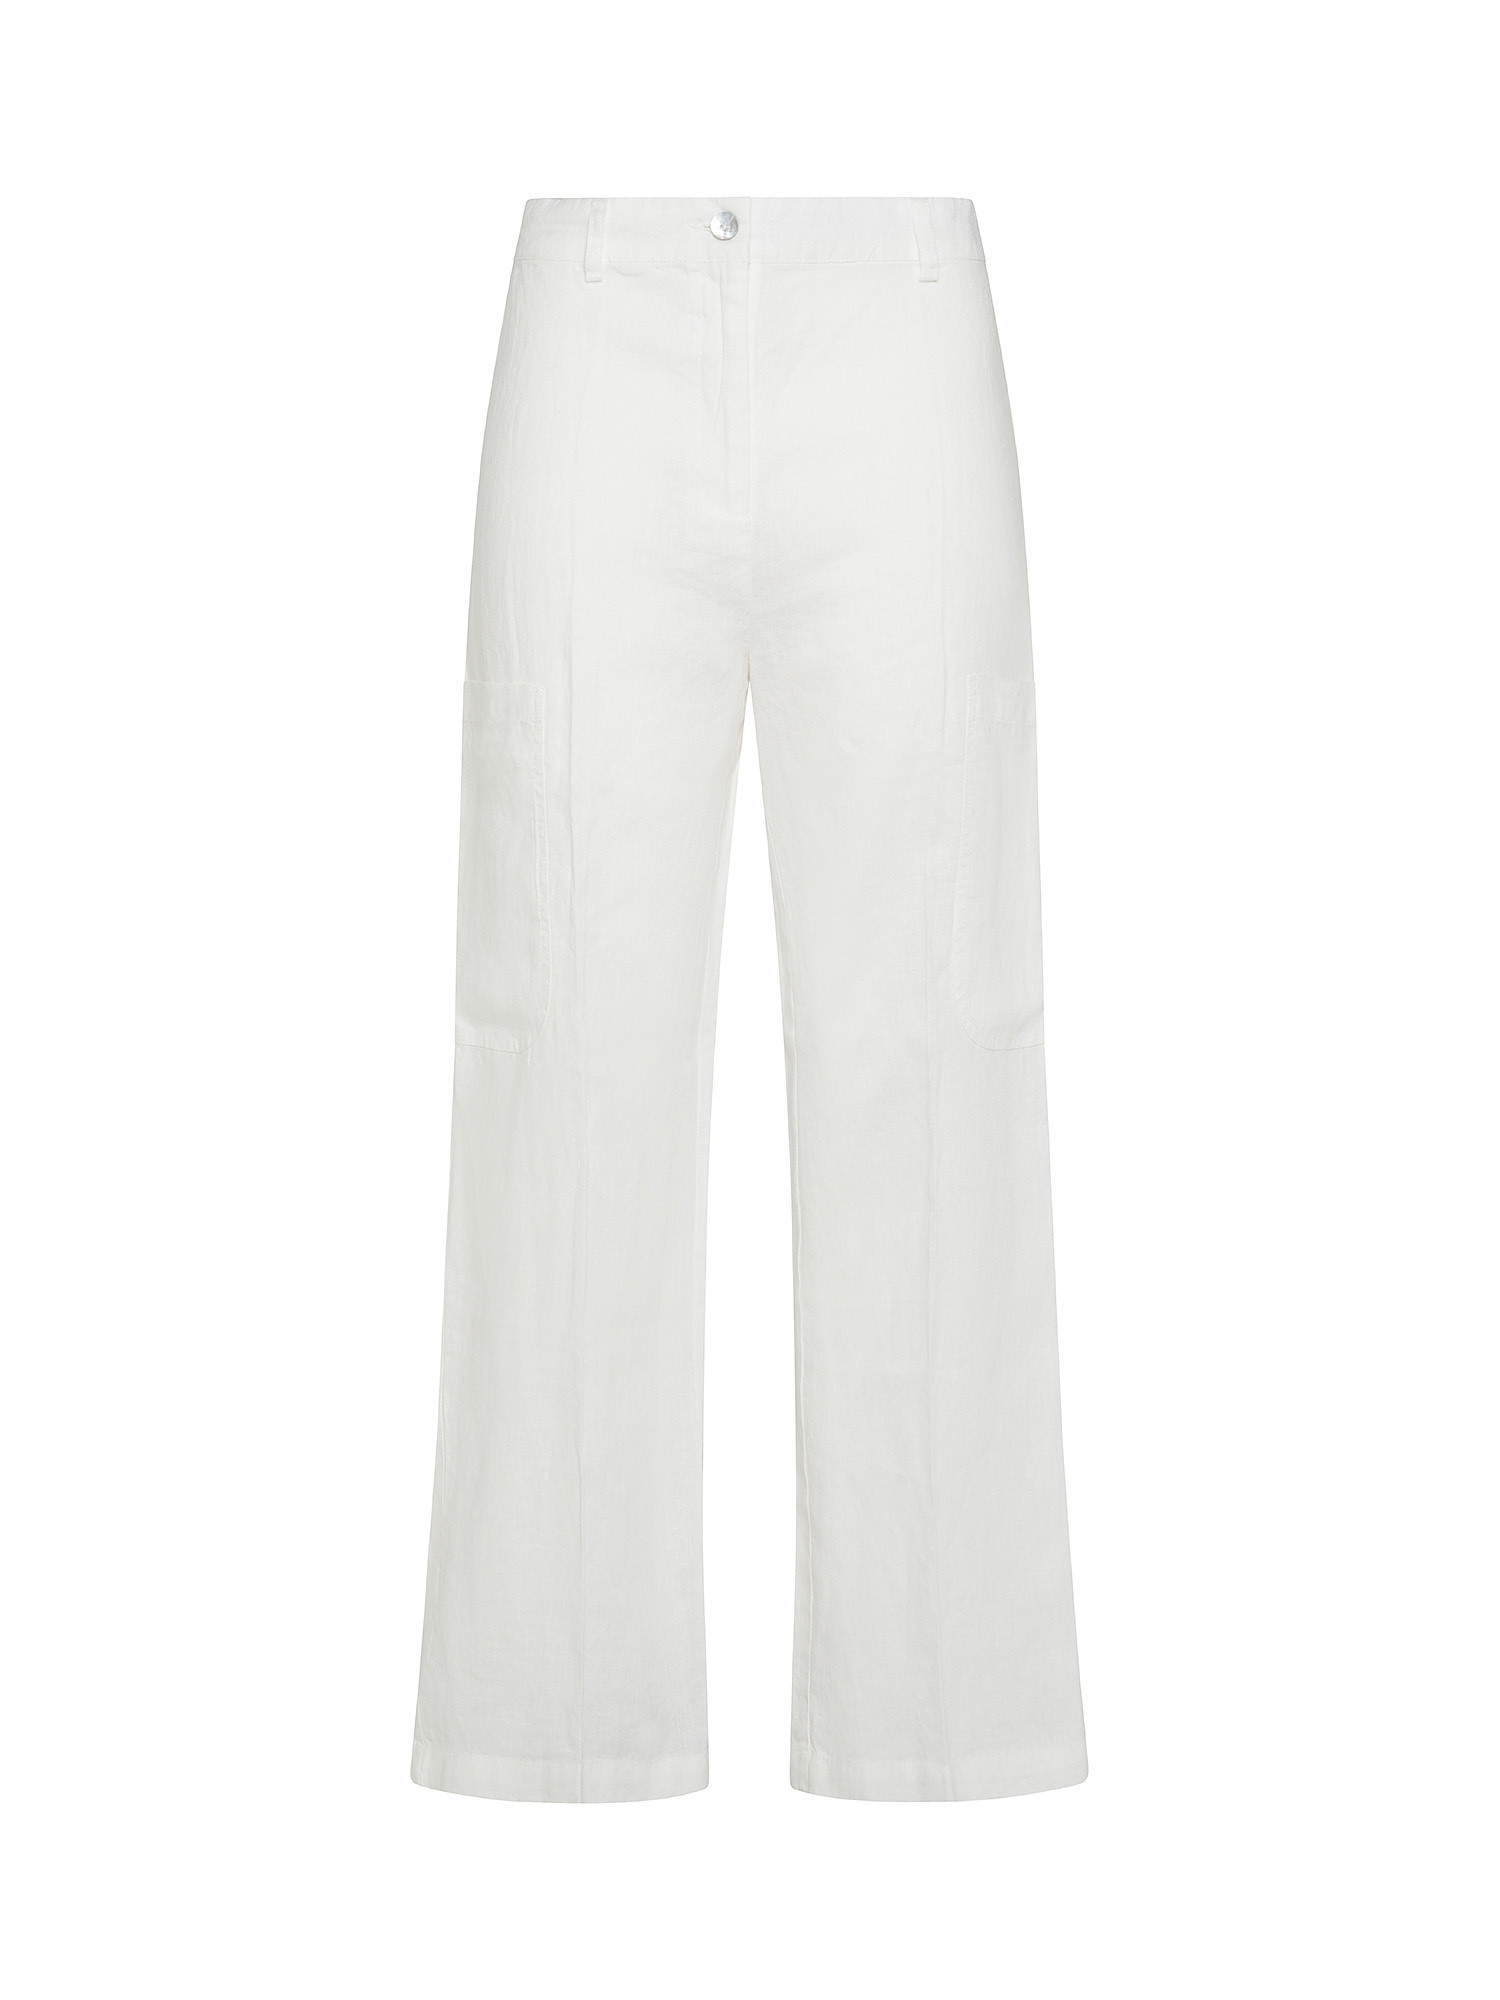 Koan - Linen cargo pants, White, large image number 0